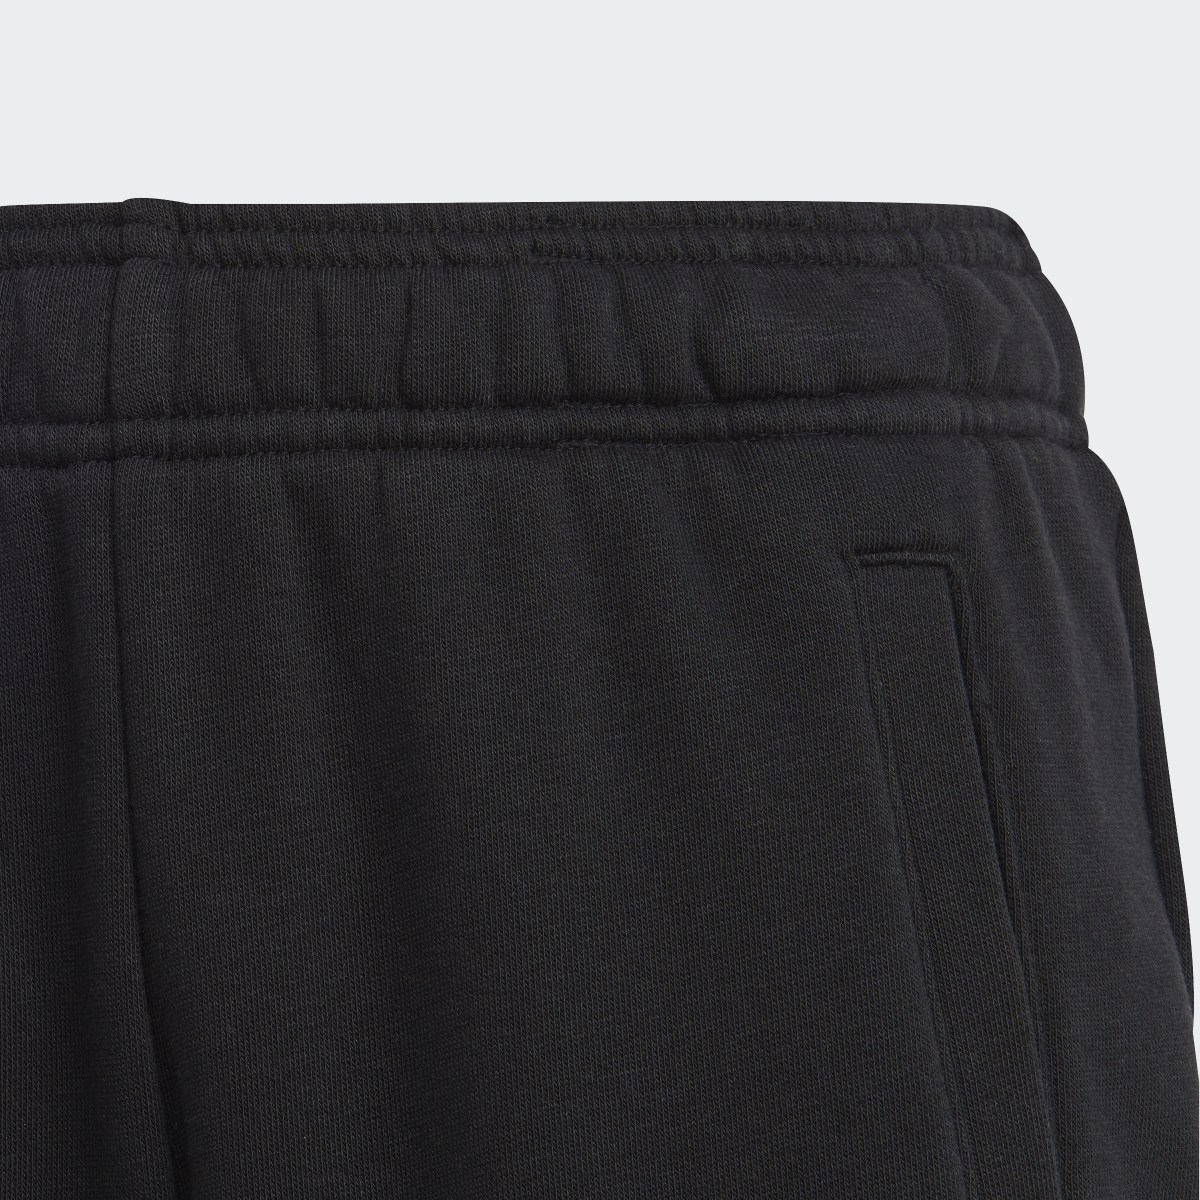 Adidas Essentials Regular Fit Big Logo Cotton Pants. 6